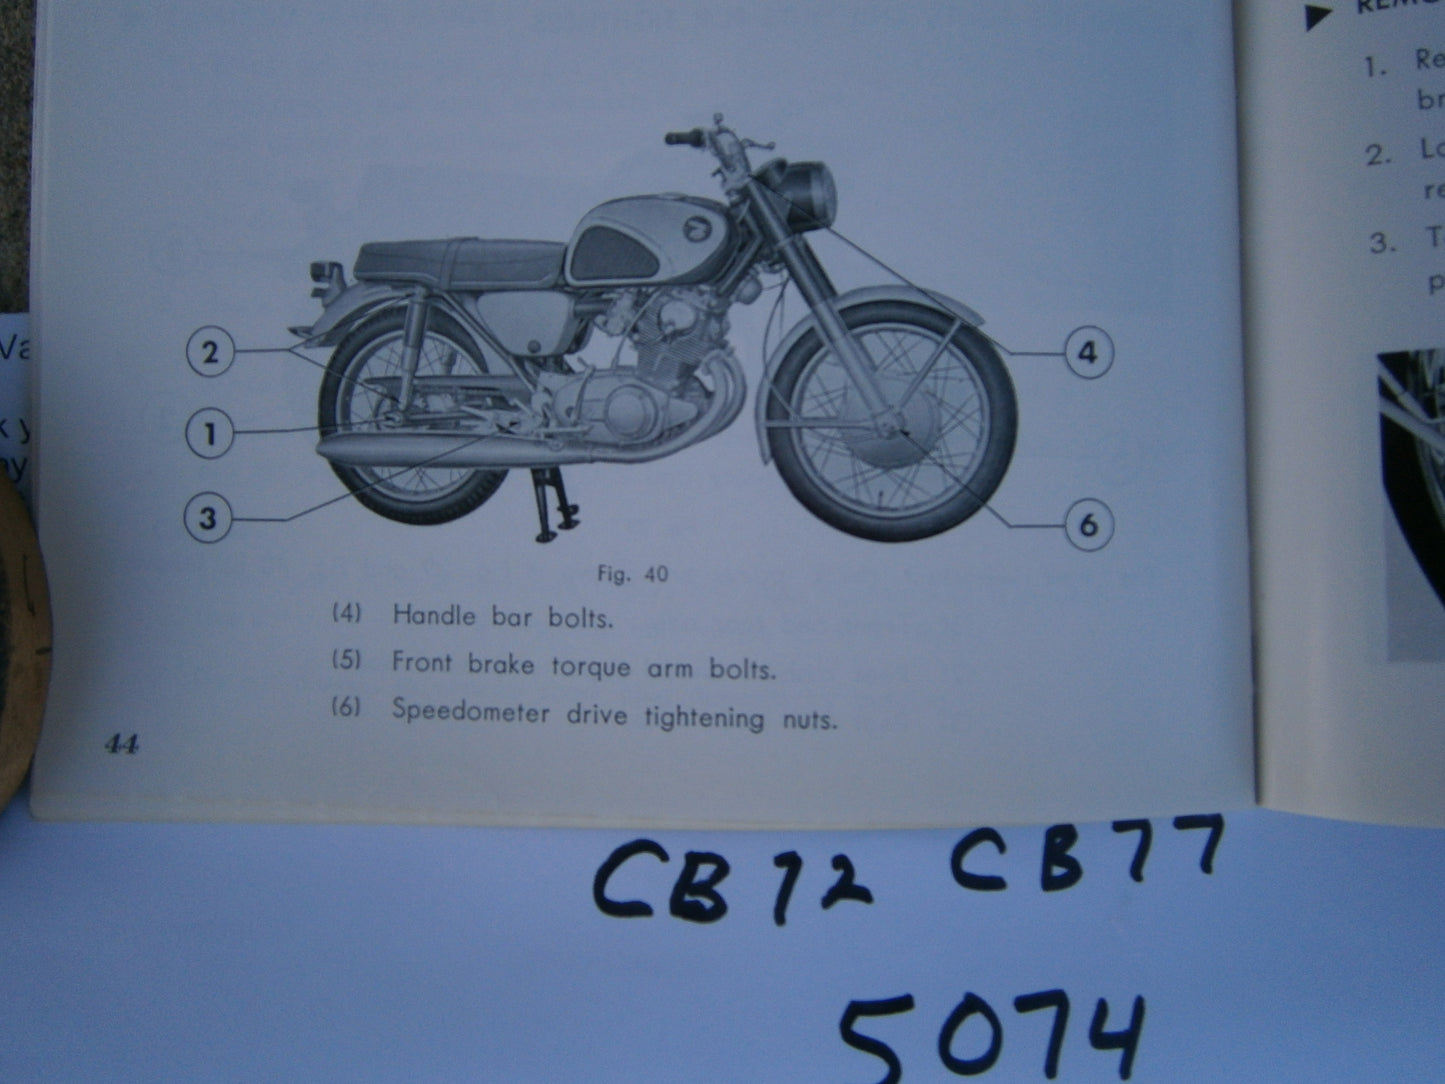 Honda CB72 CB77 NOS Owners Manual 5074